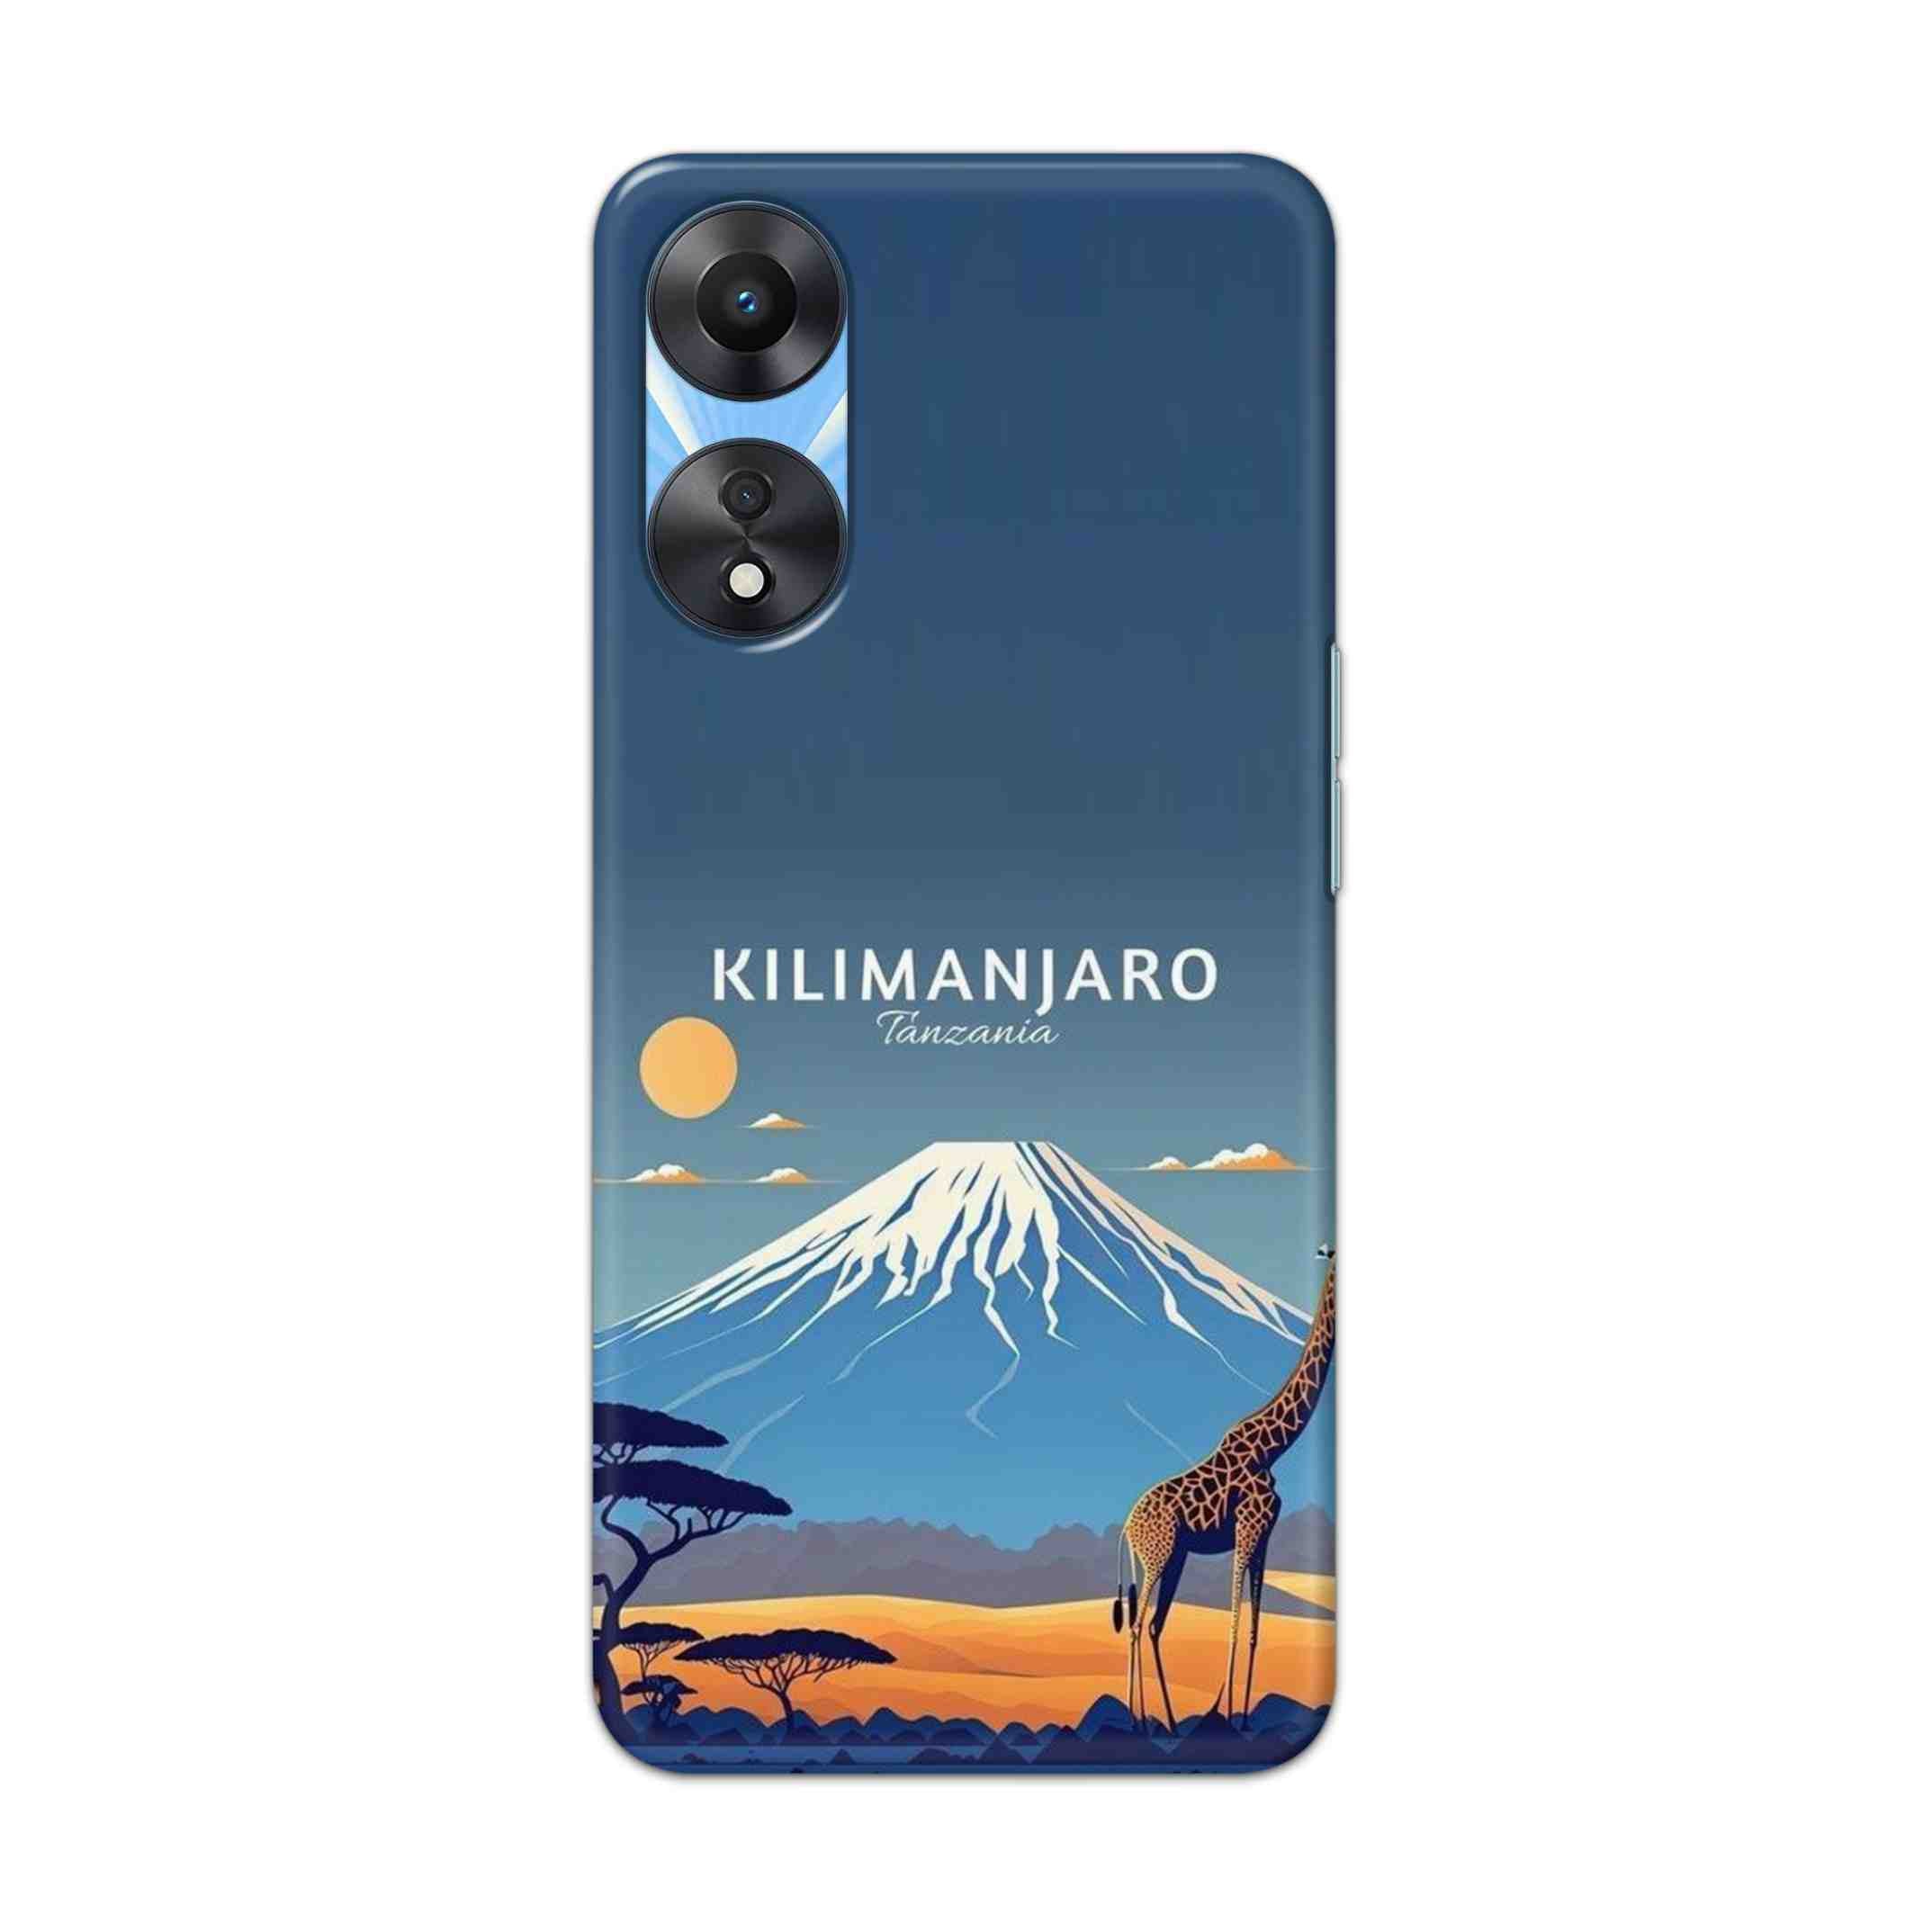 Buy Kilimanjaro Hard Back Mobile Phone Case Cover For OPPO A78 Online